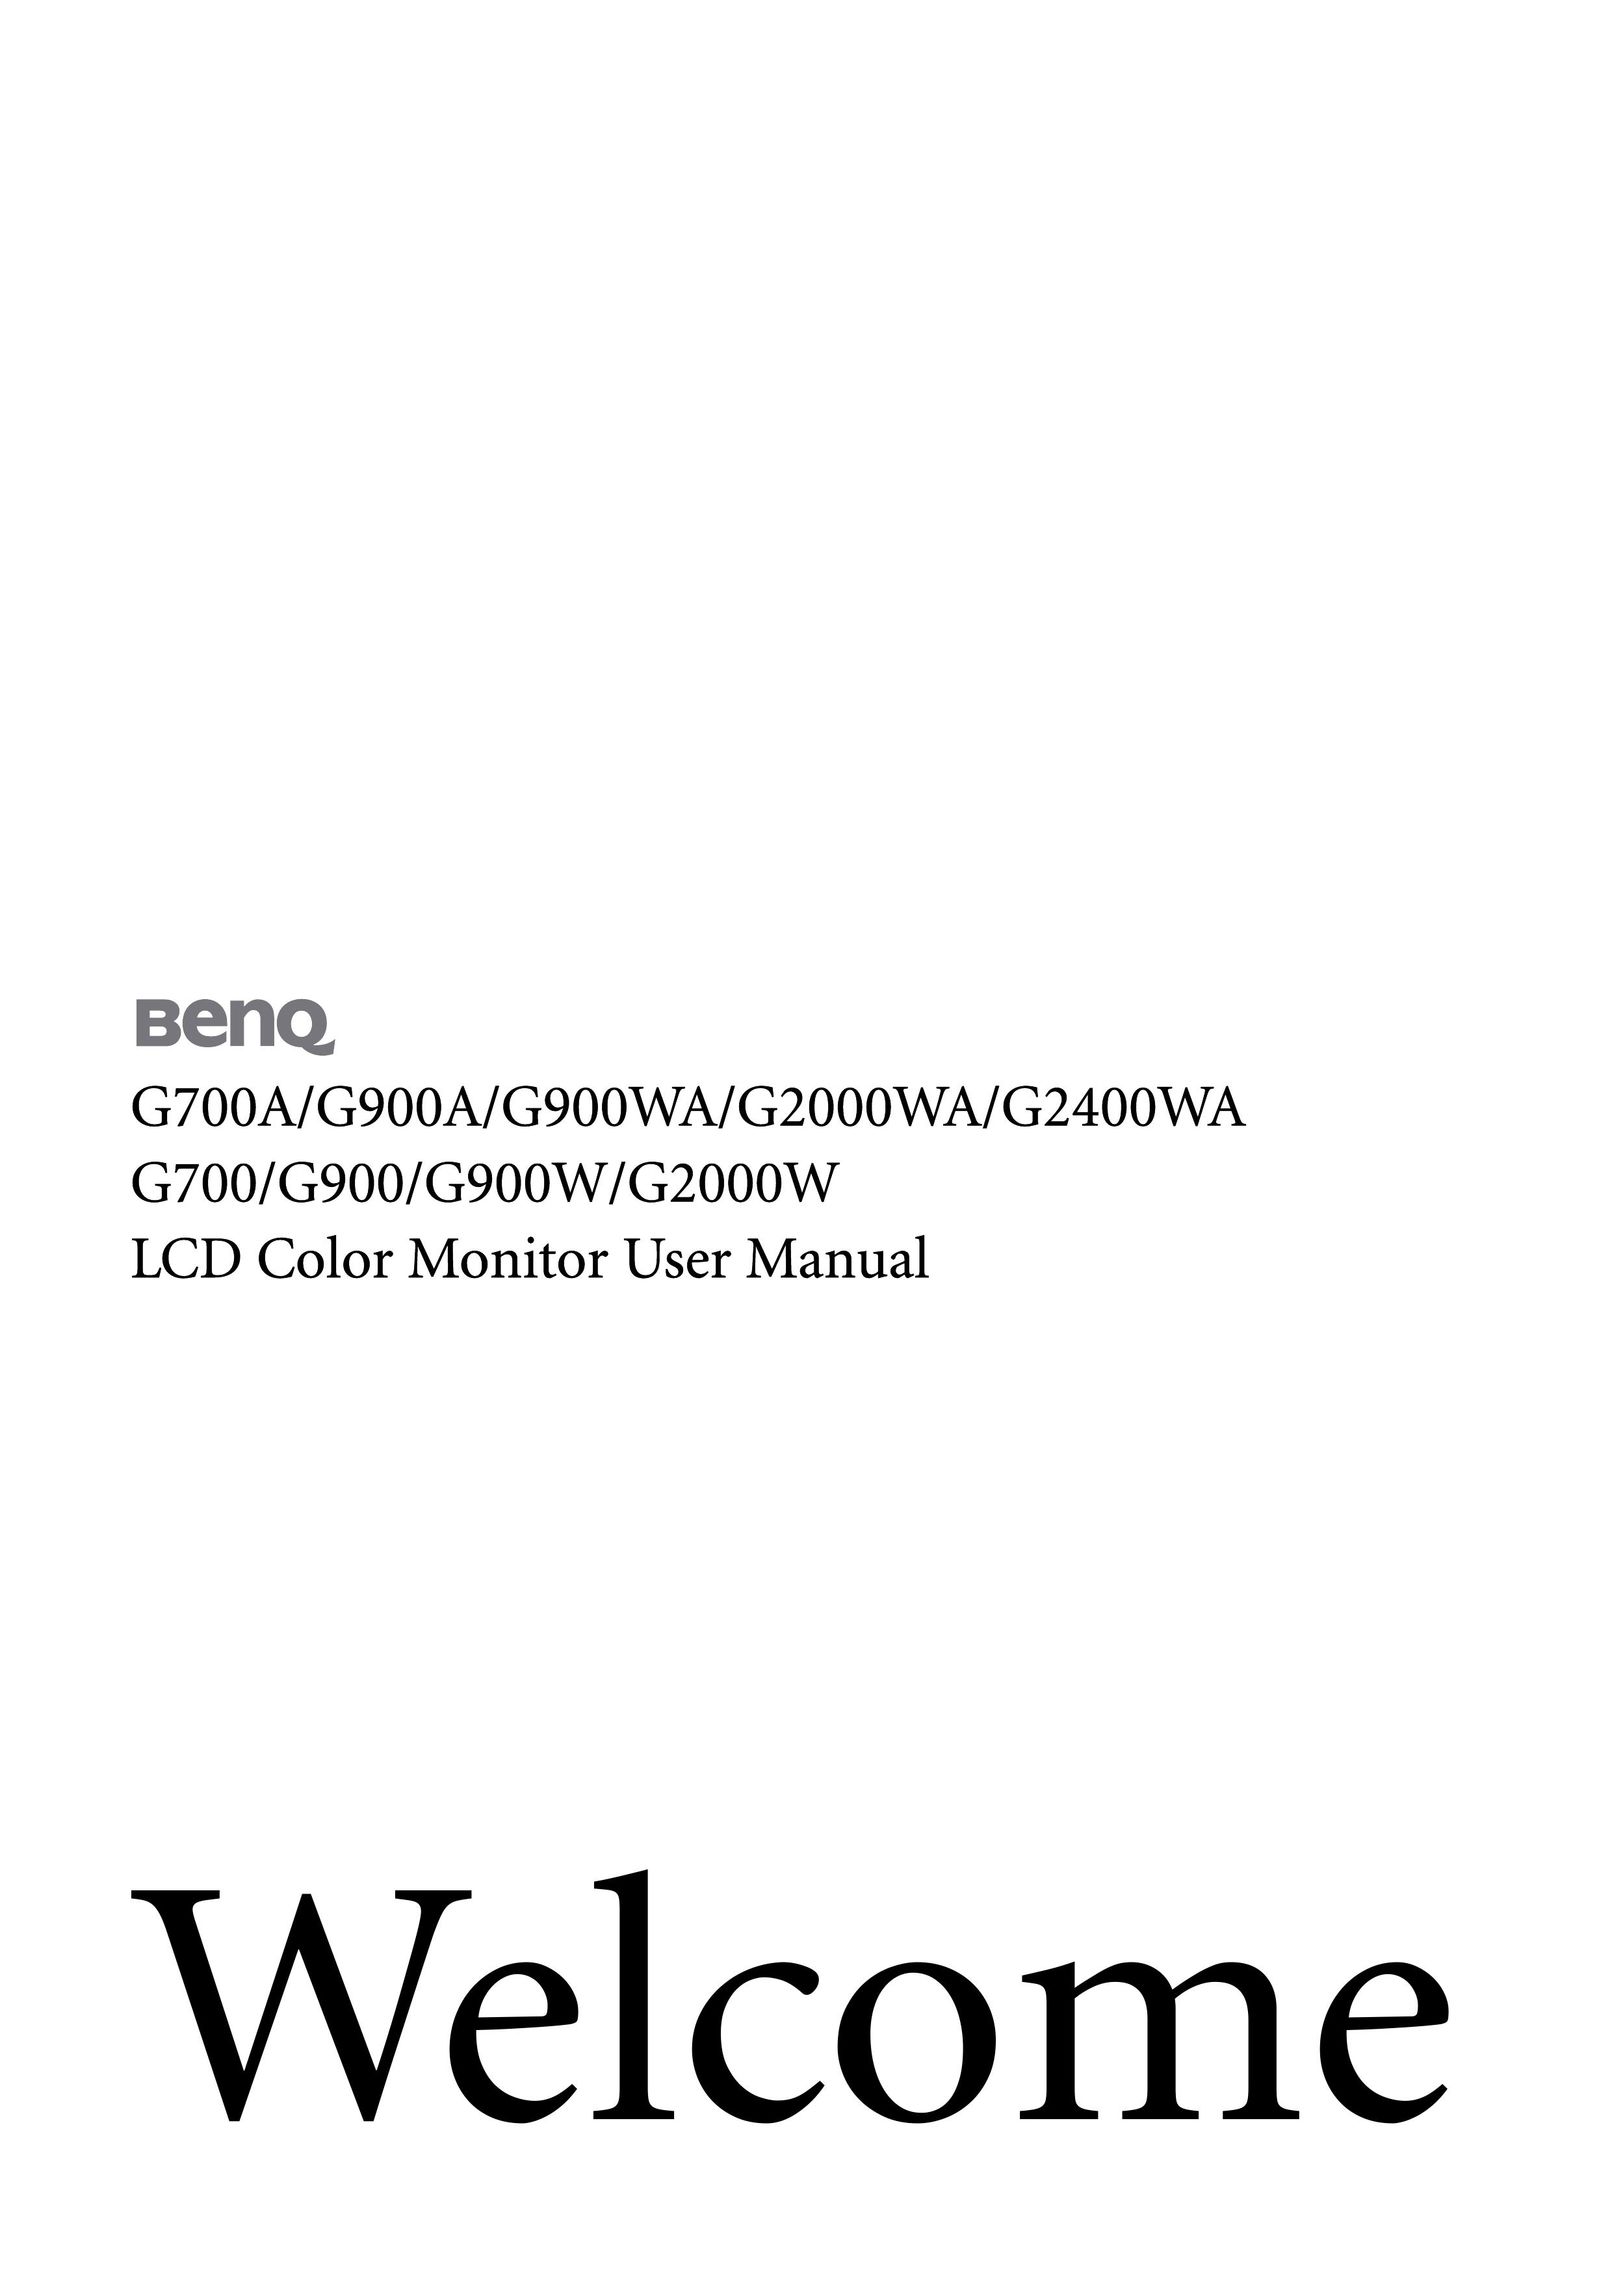 BenQ G2000W Computer Monitor User Manual